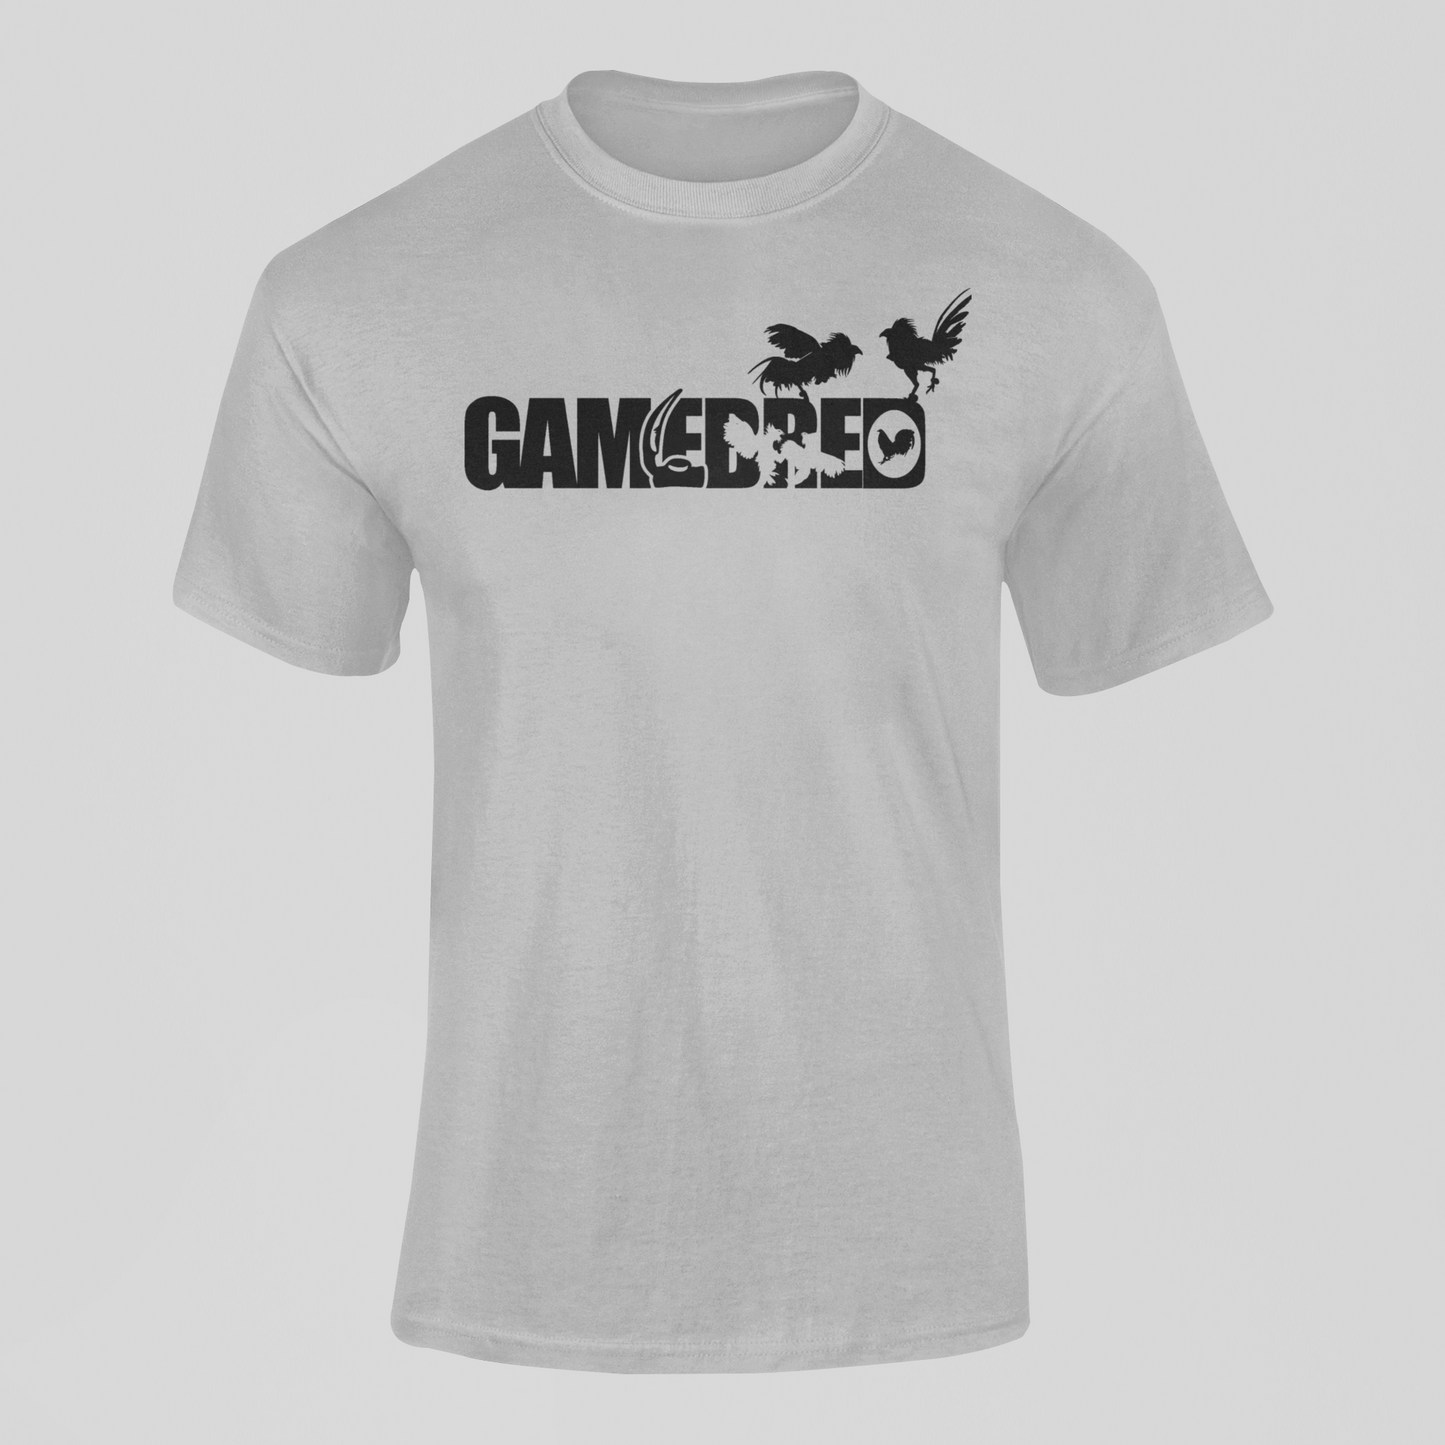 Gamebred Cockfighting T-Shirt